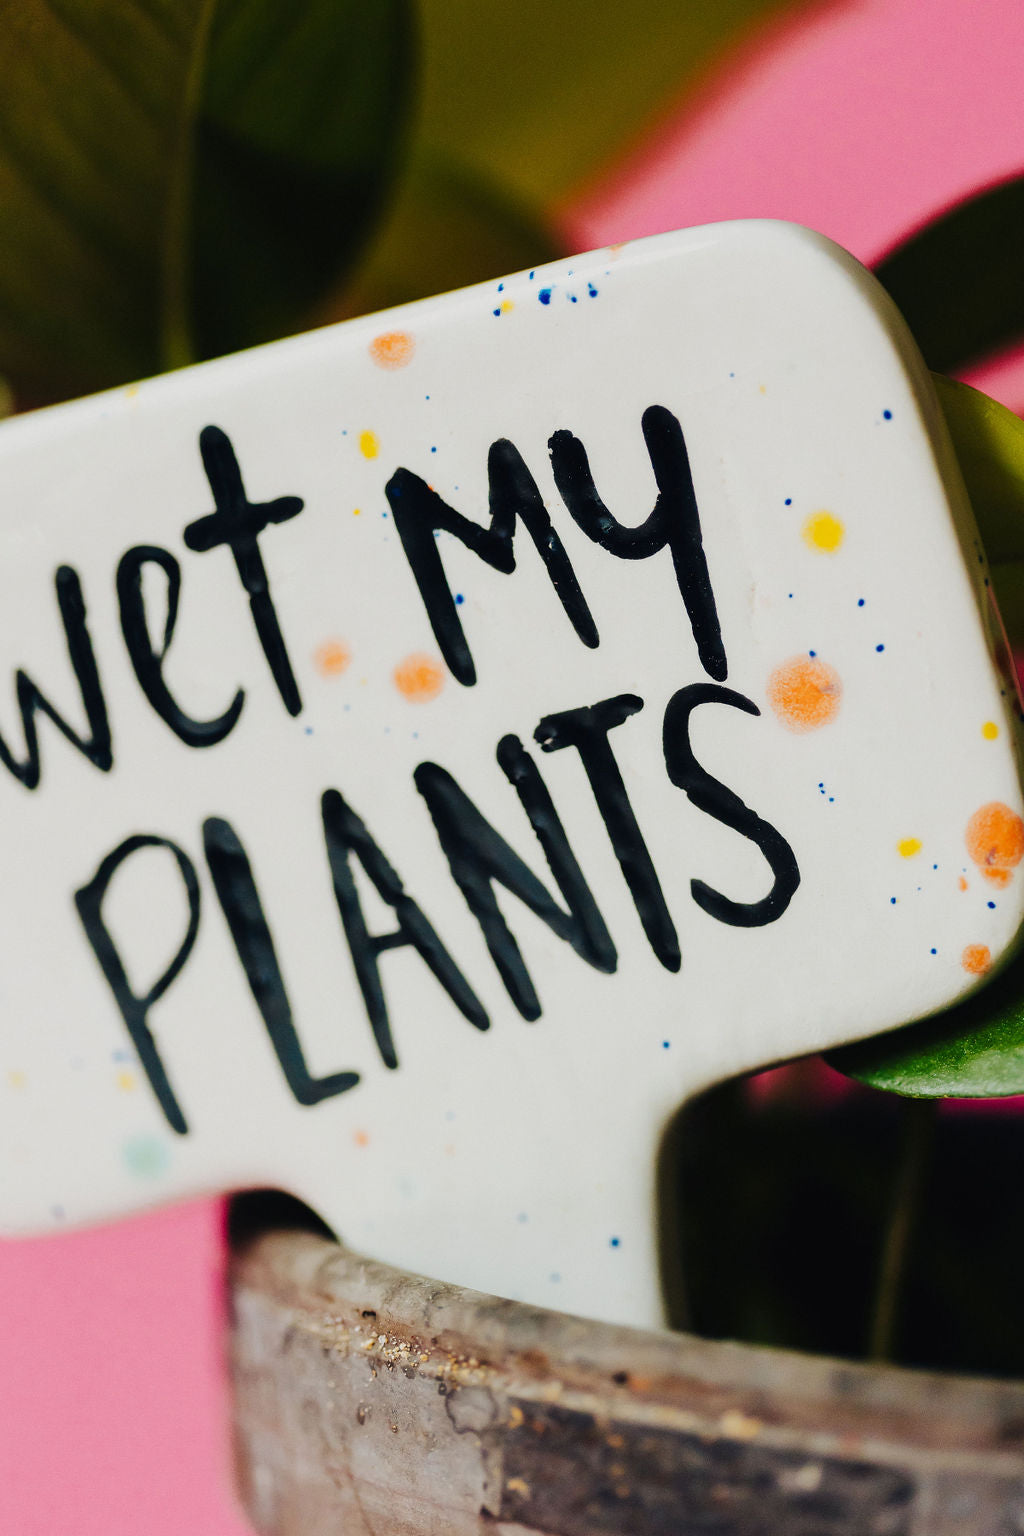 I Wet My Plants Funny Punny Garden Plant Stake